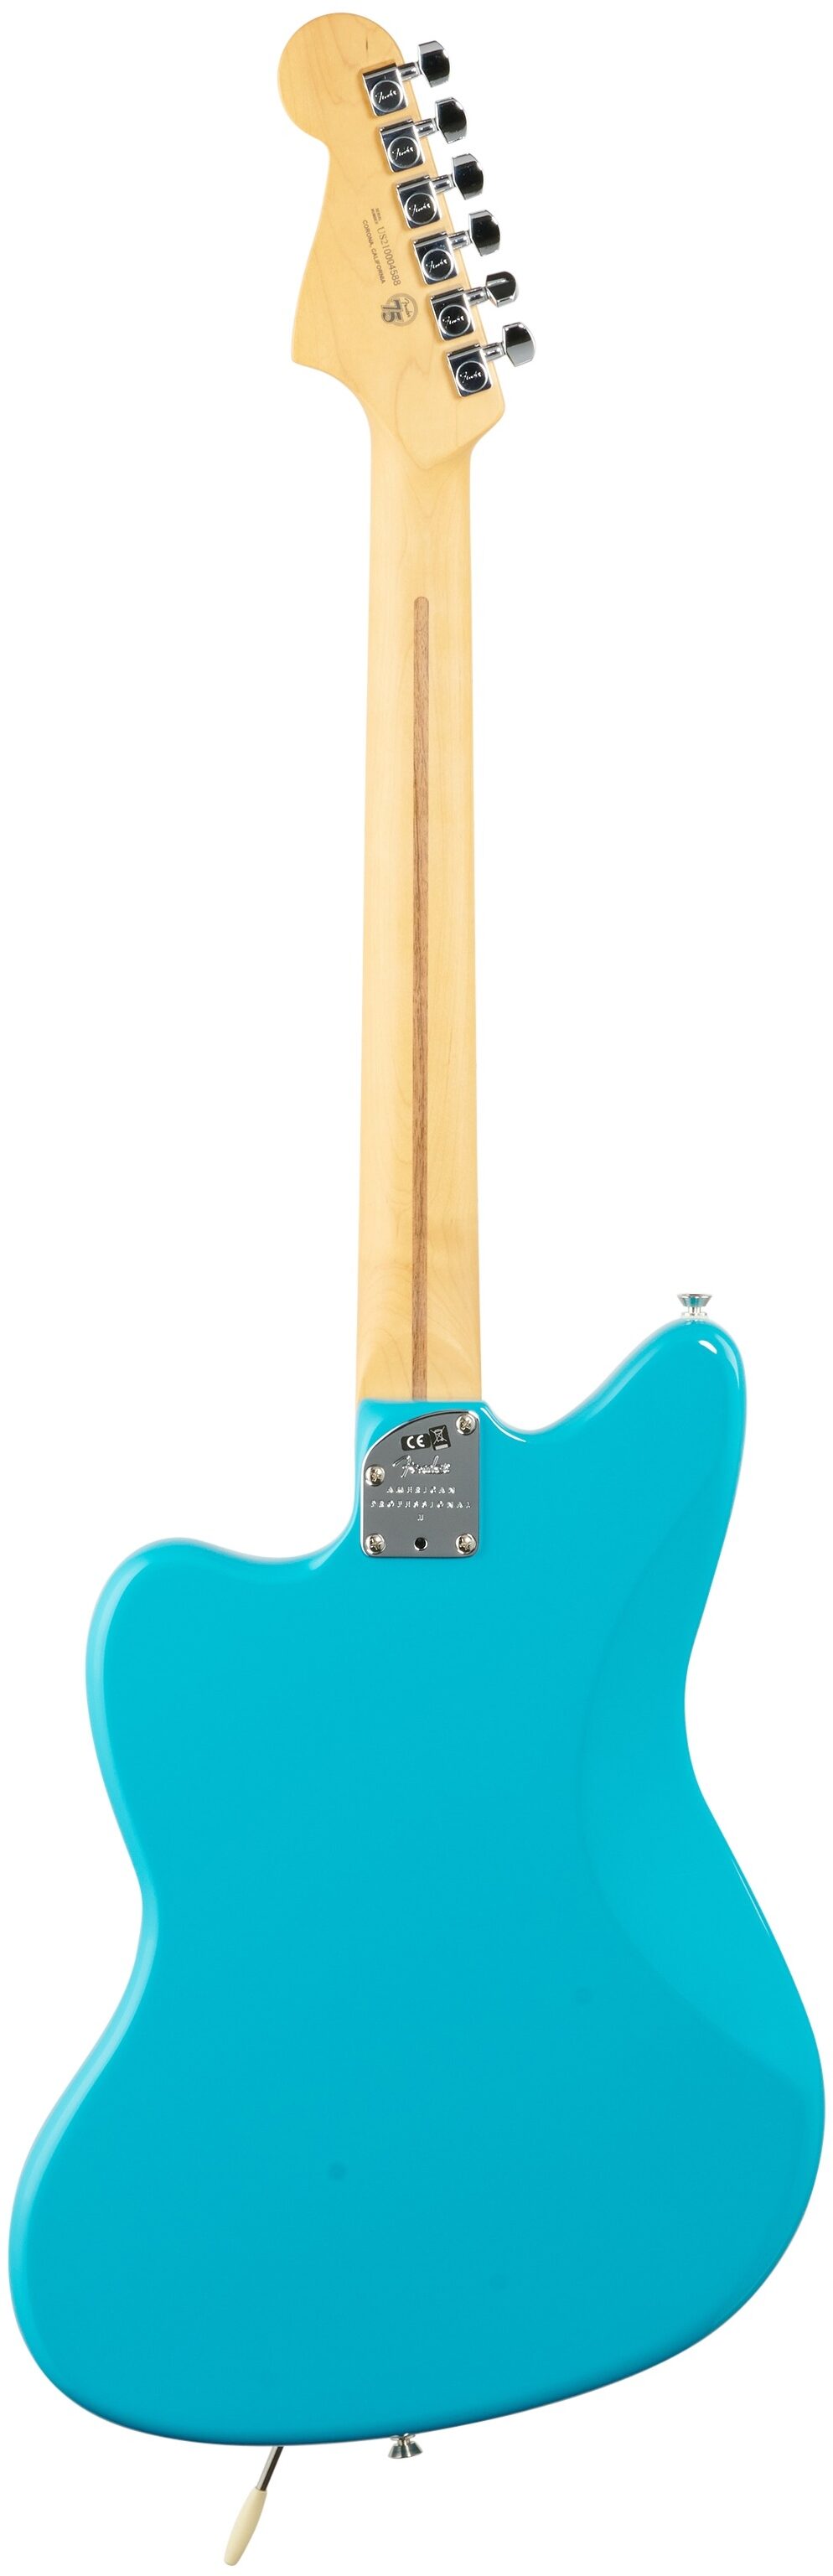 Fender American Pro II Jazzmaster Electric Guitar, Maple